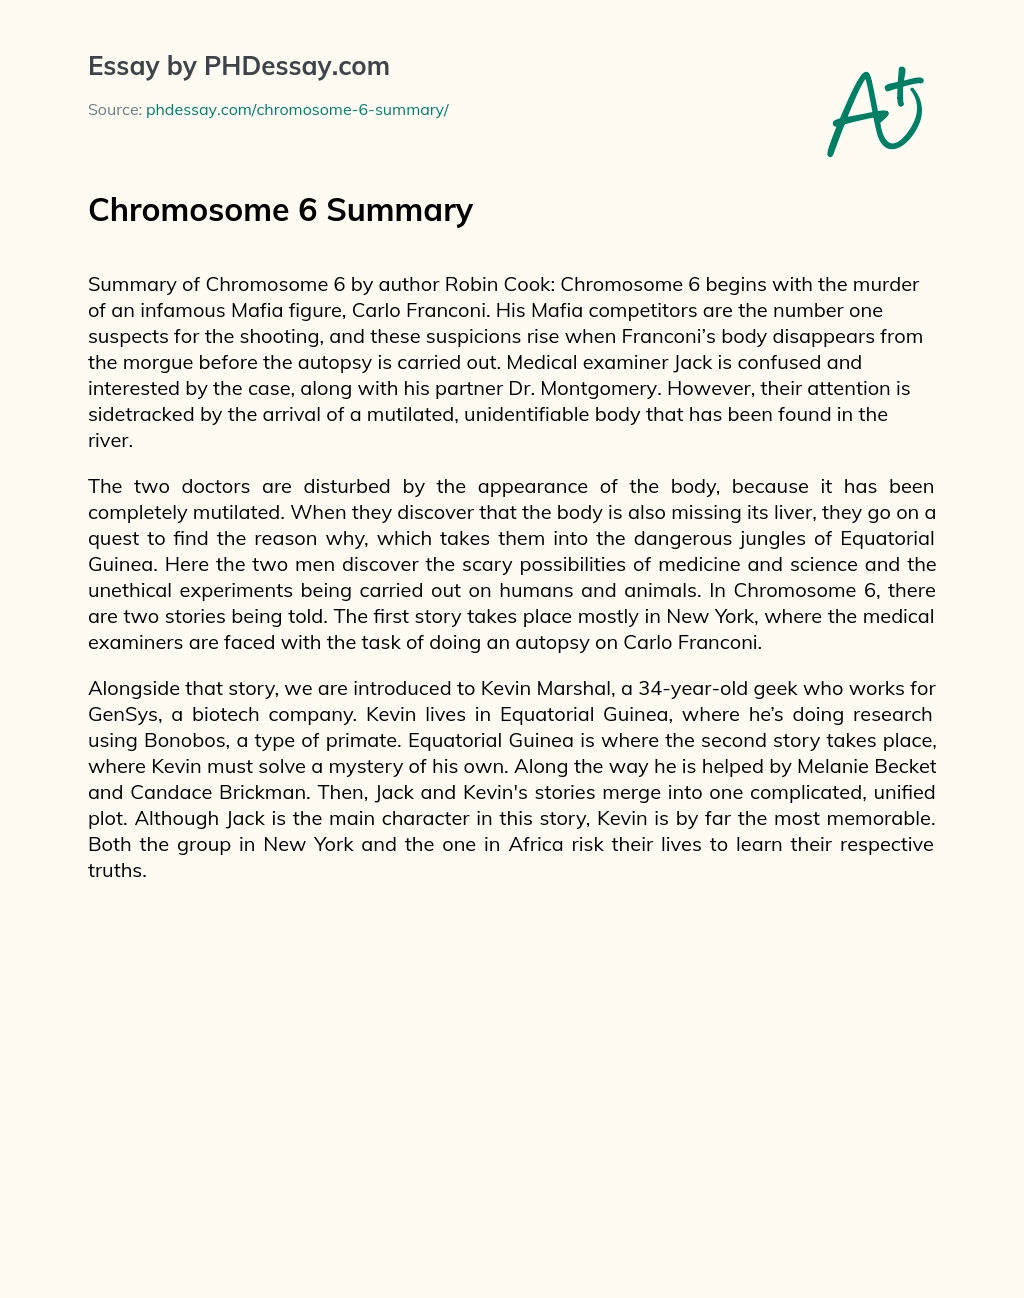 Chromosome 6 Summary essay